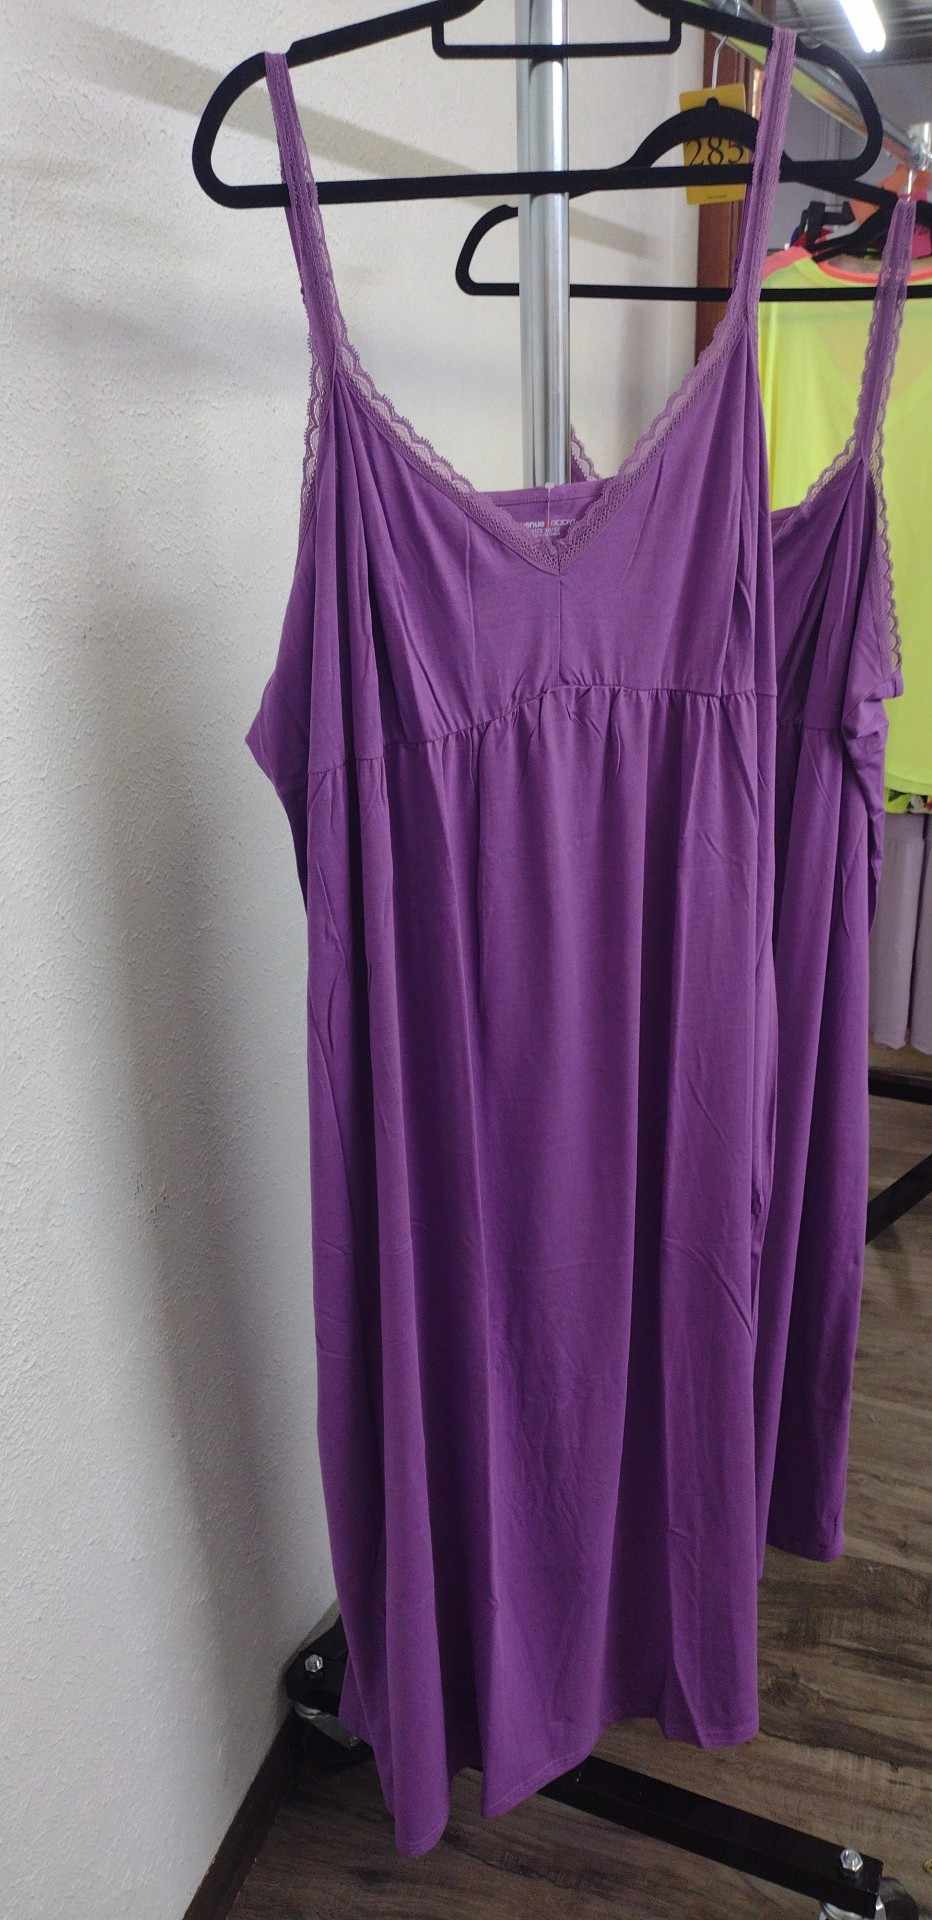 Purple Lace Top Adjustable Strap Nightgown Sleepwear